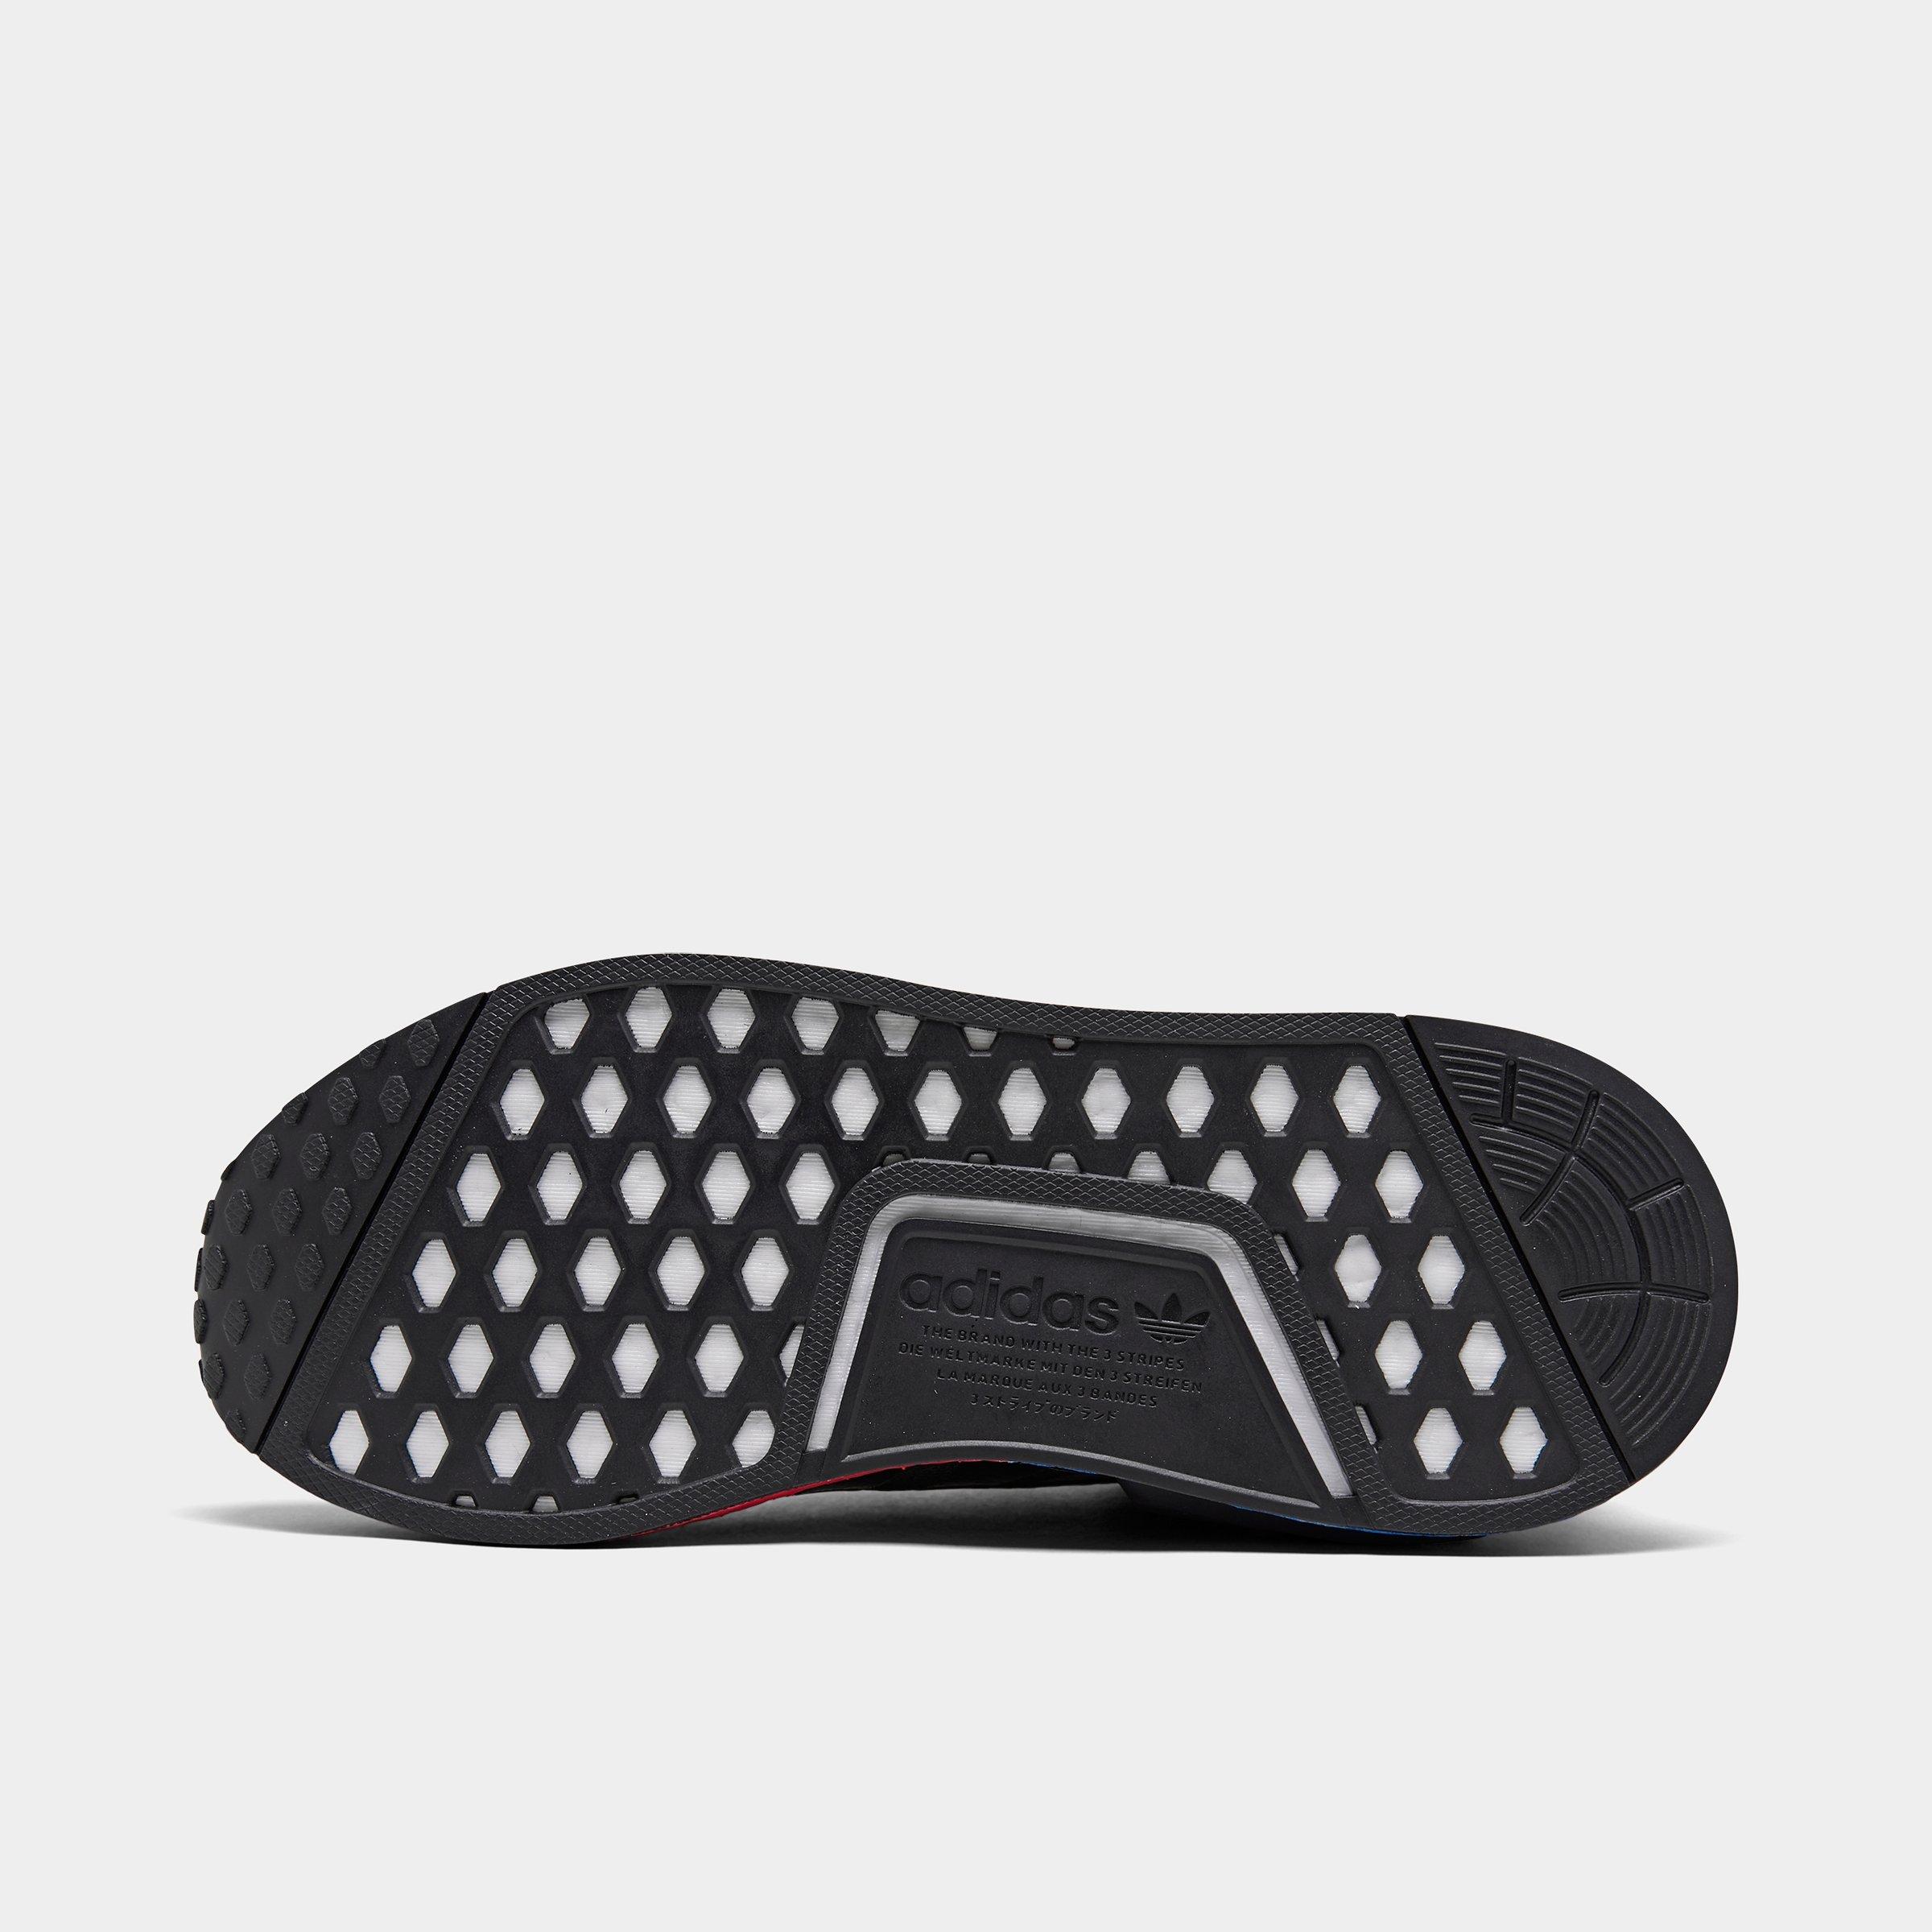 Adidas shoes nmd r1 japan black mens size 11 poshmark